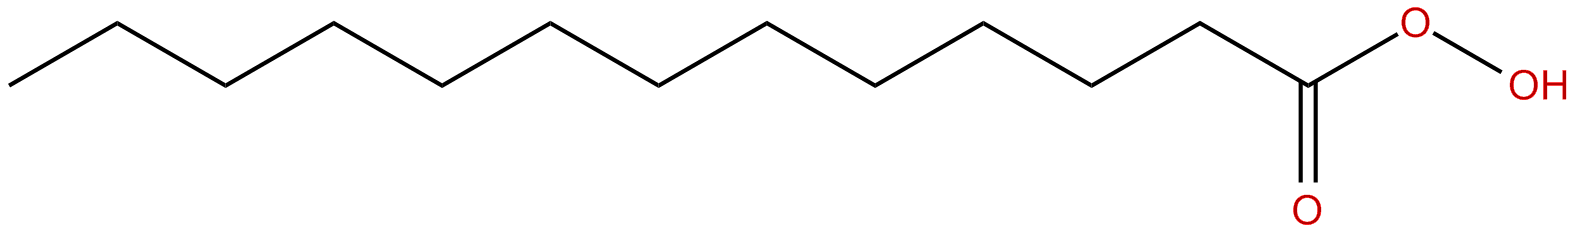 Image of peroxytridecanoic acid